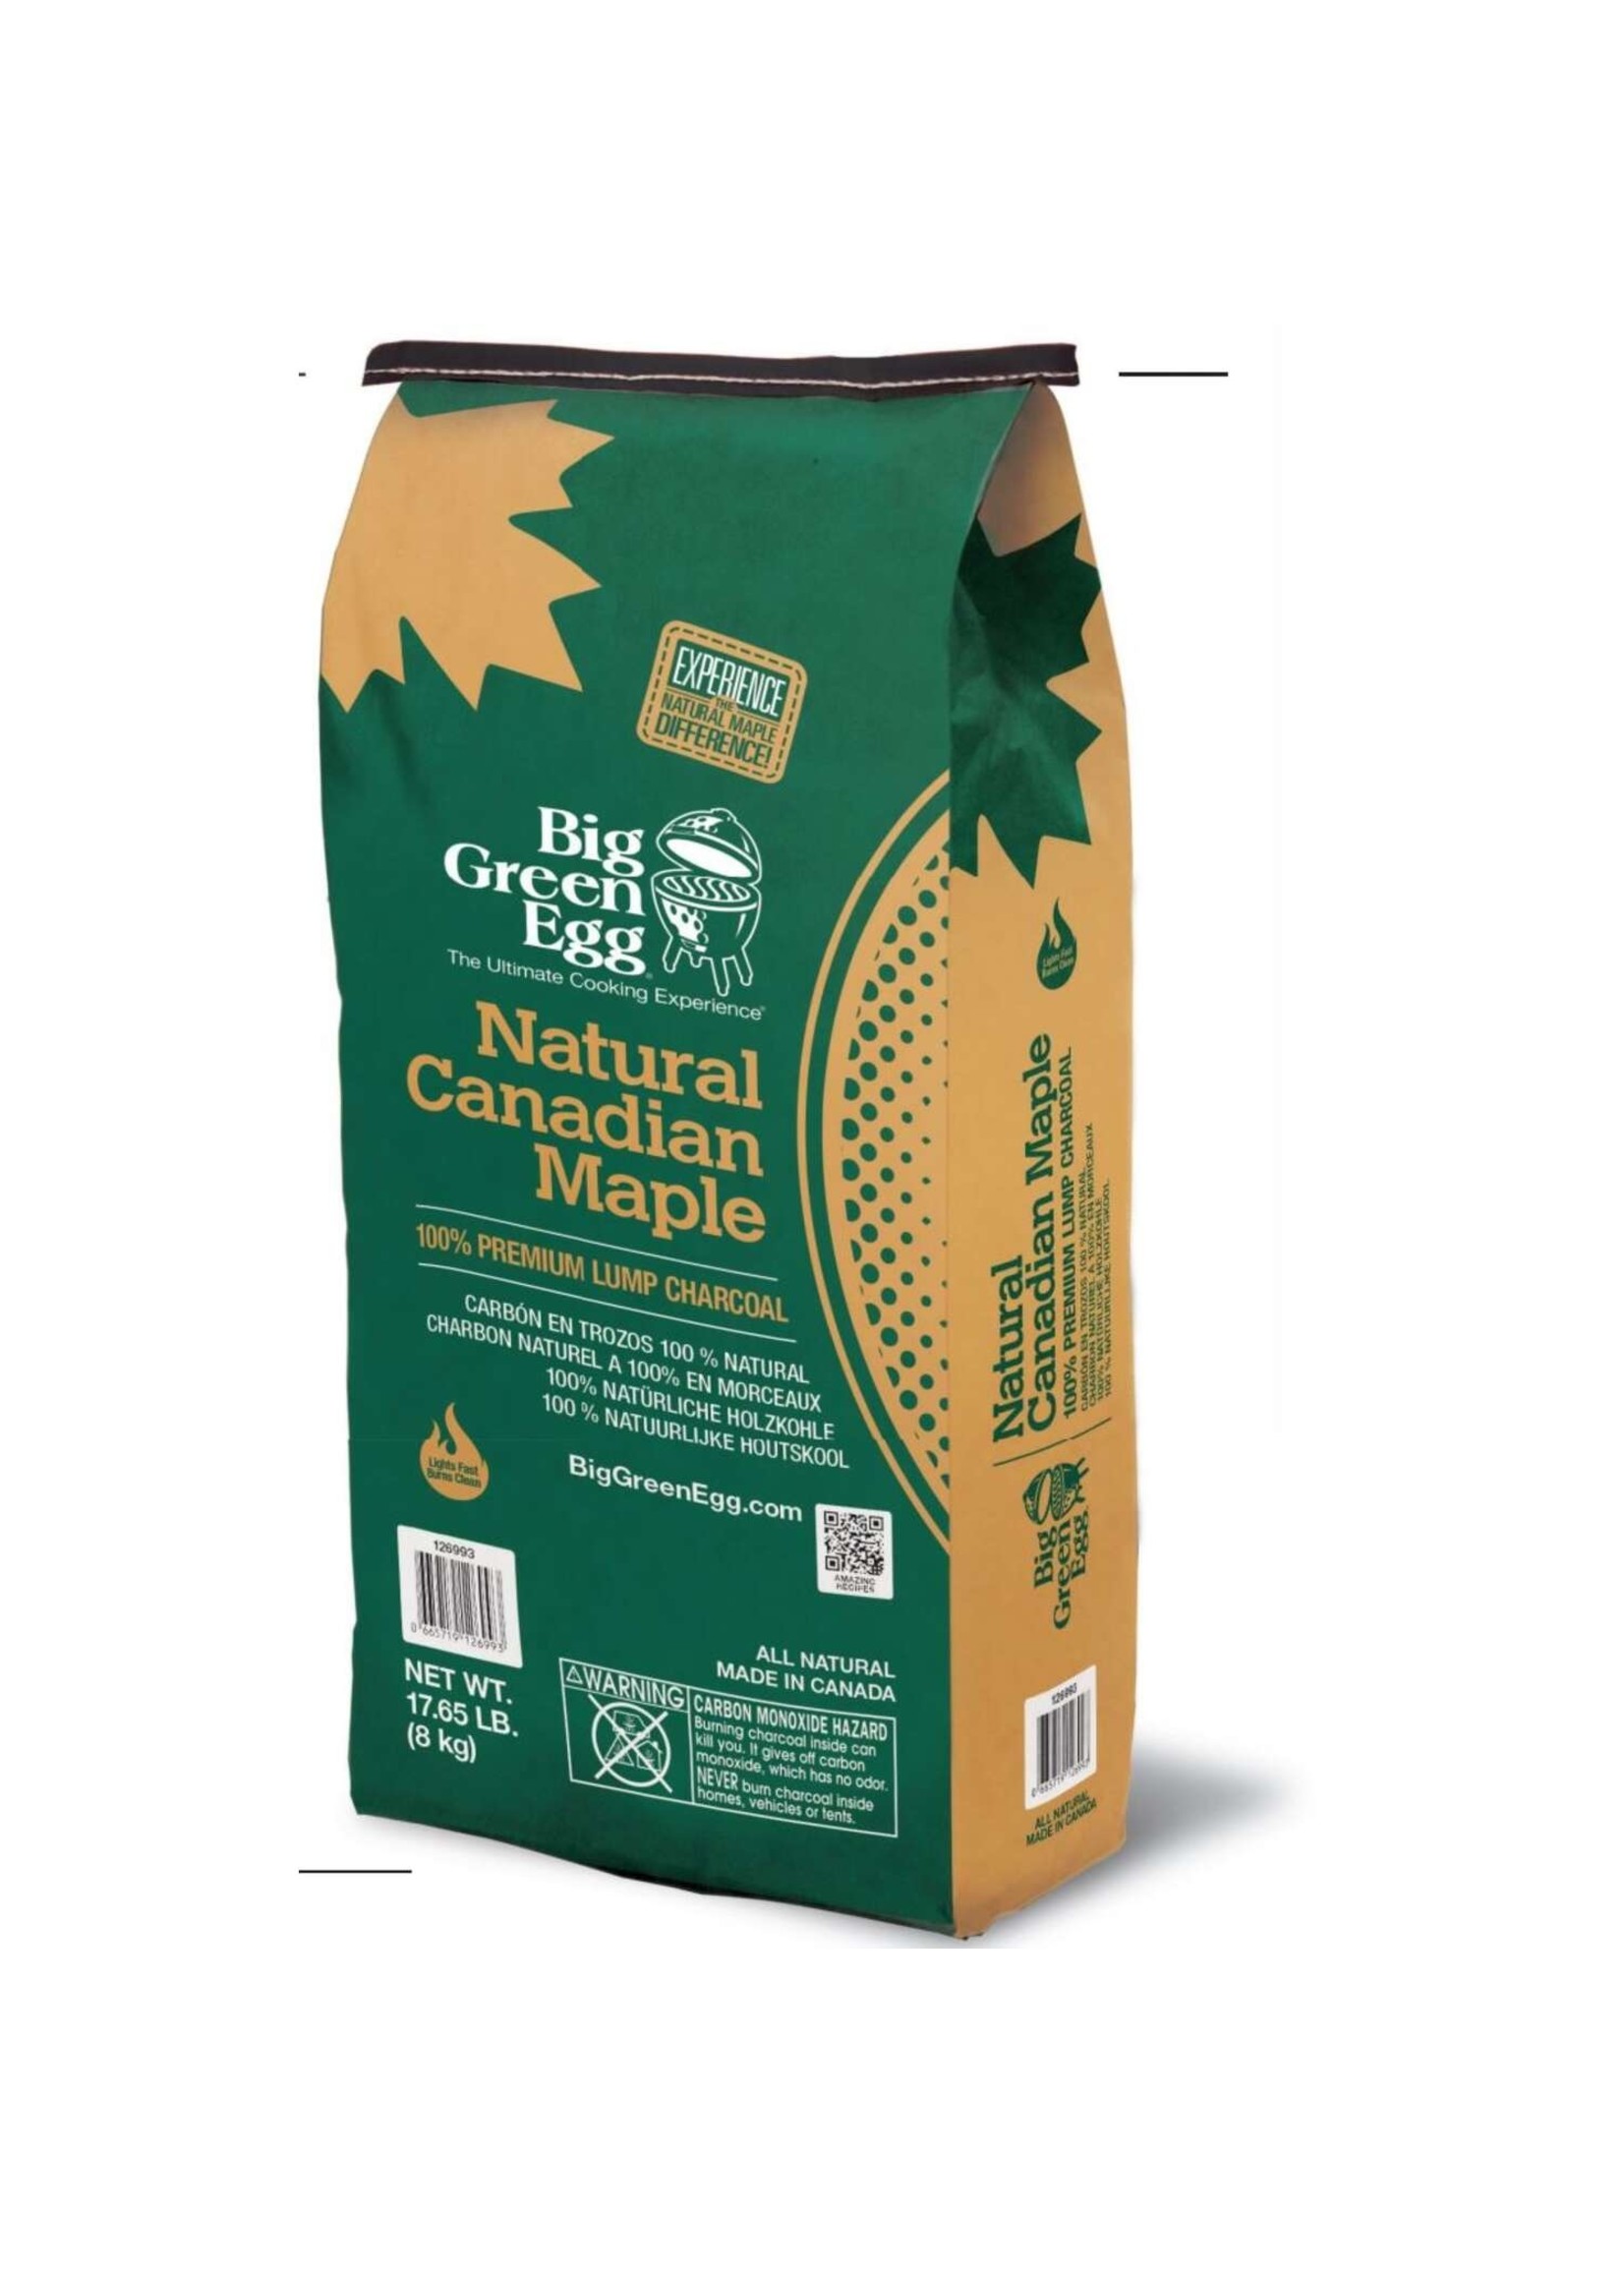 Big Green Egg BGE Natural Canadian Maple Charcoal 17.6lbs.